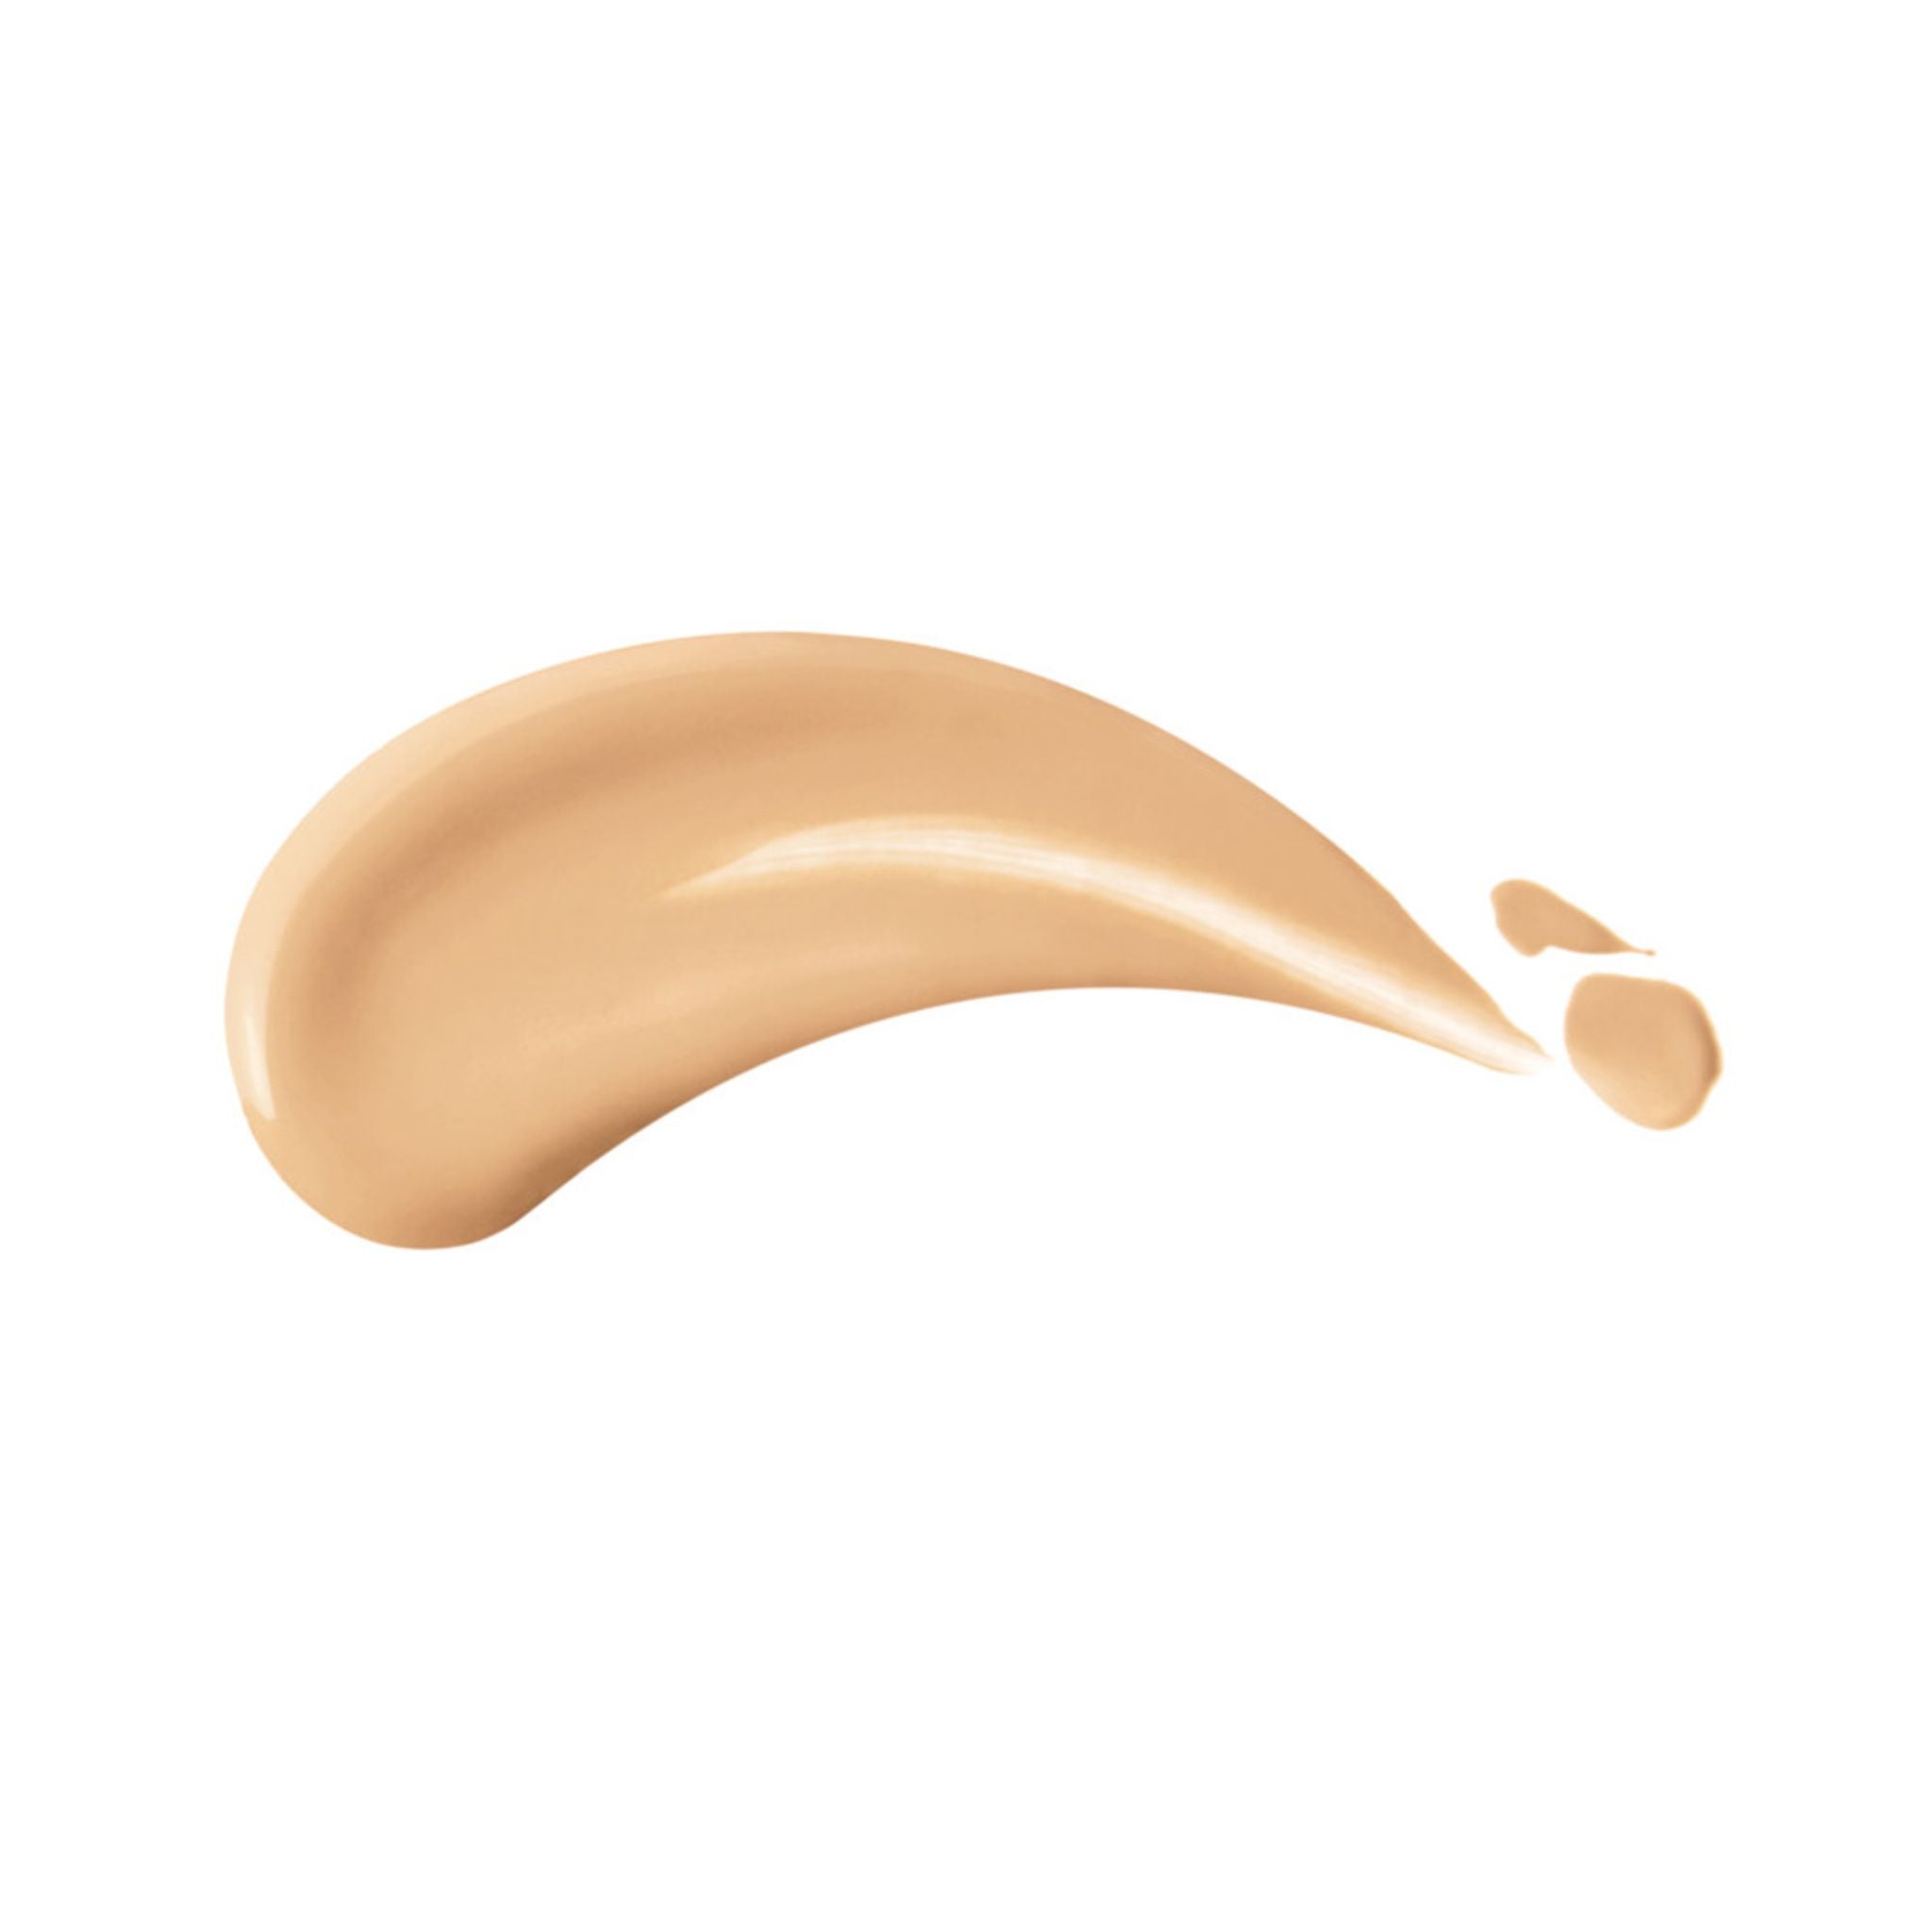 Shiseido Makeup RevitalEssence Skin Glow Foundation in 320 Pine (30ml)